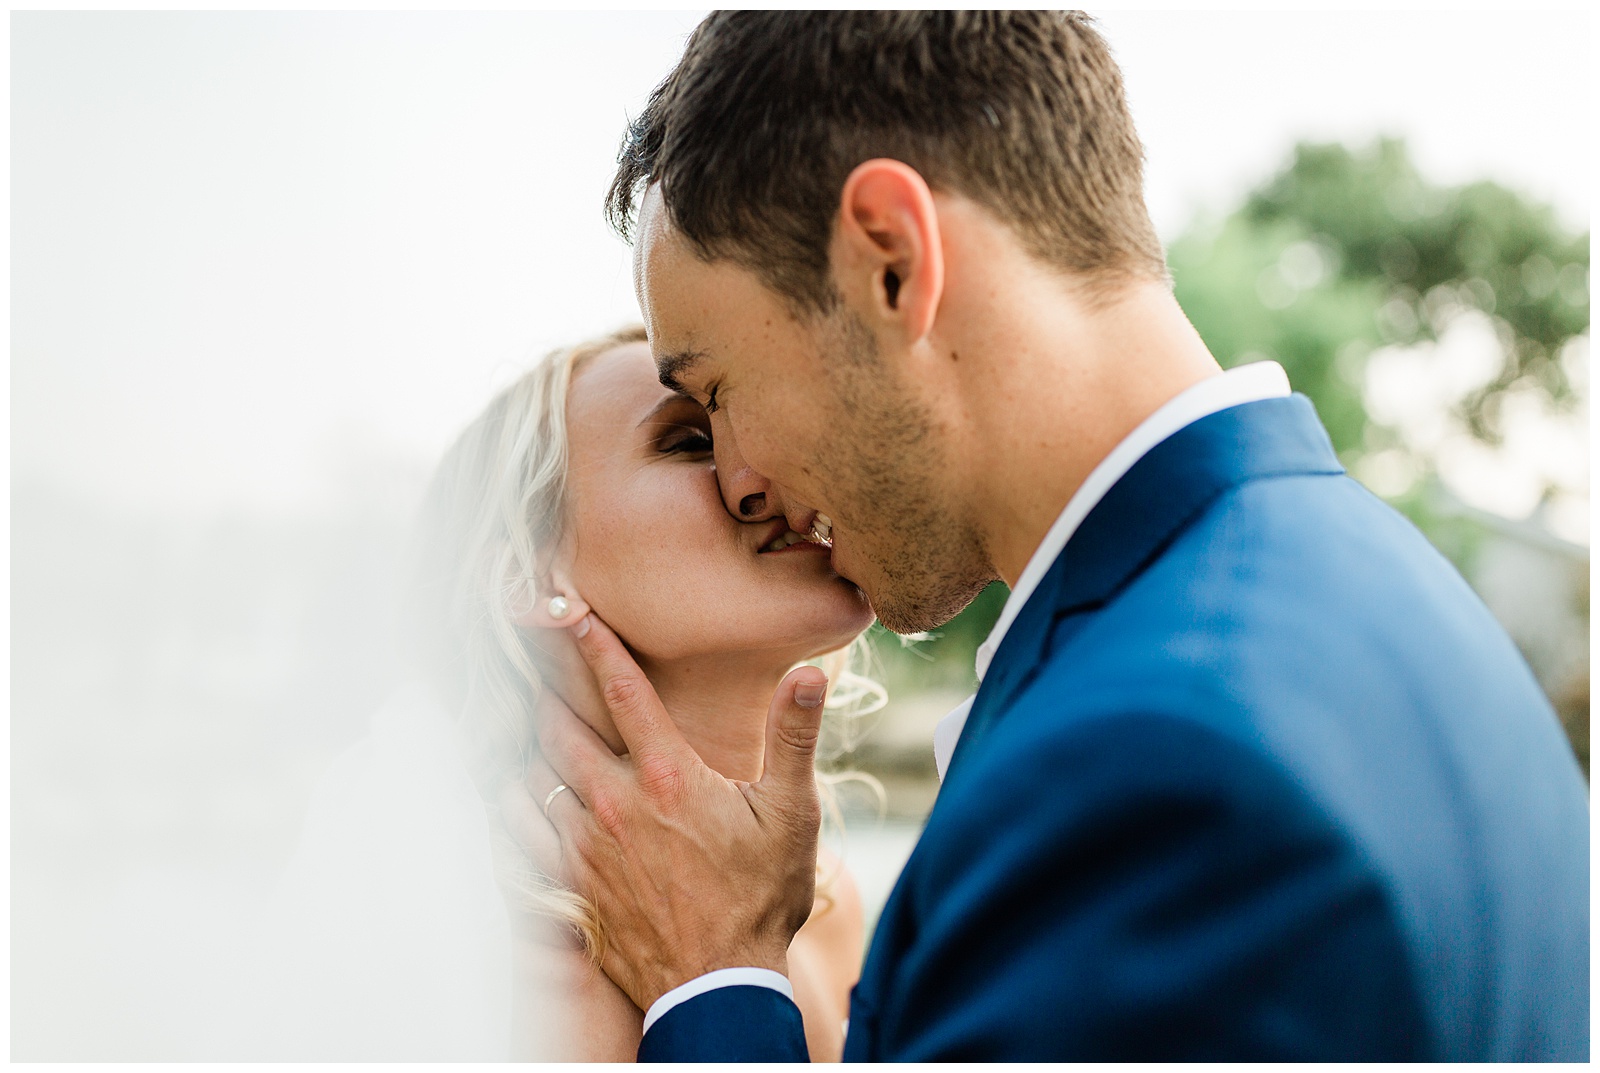 Bride and groom kissing behind the wedding veil